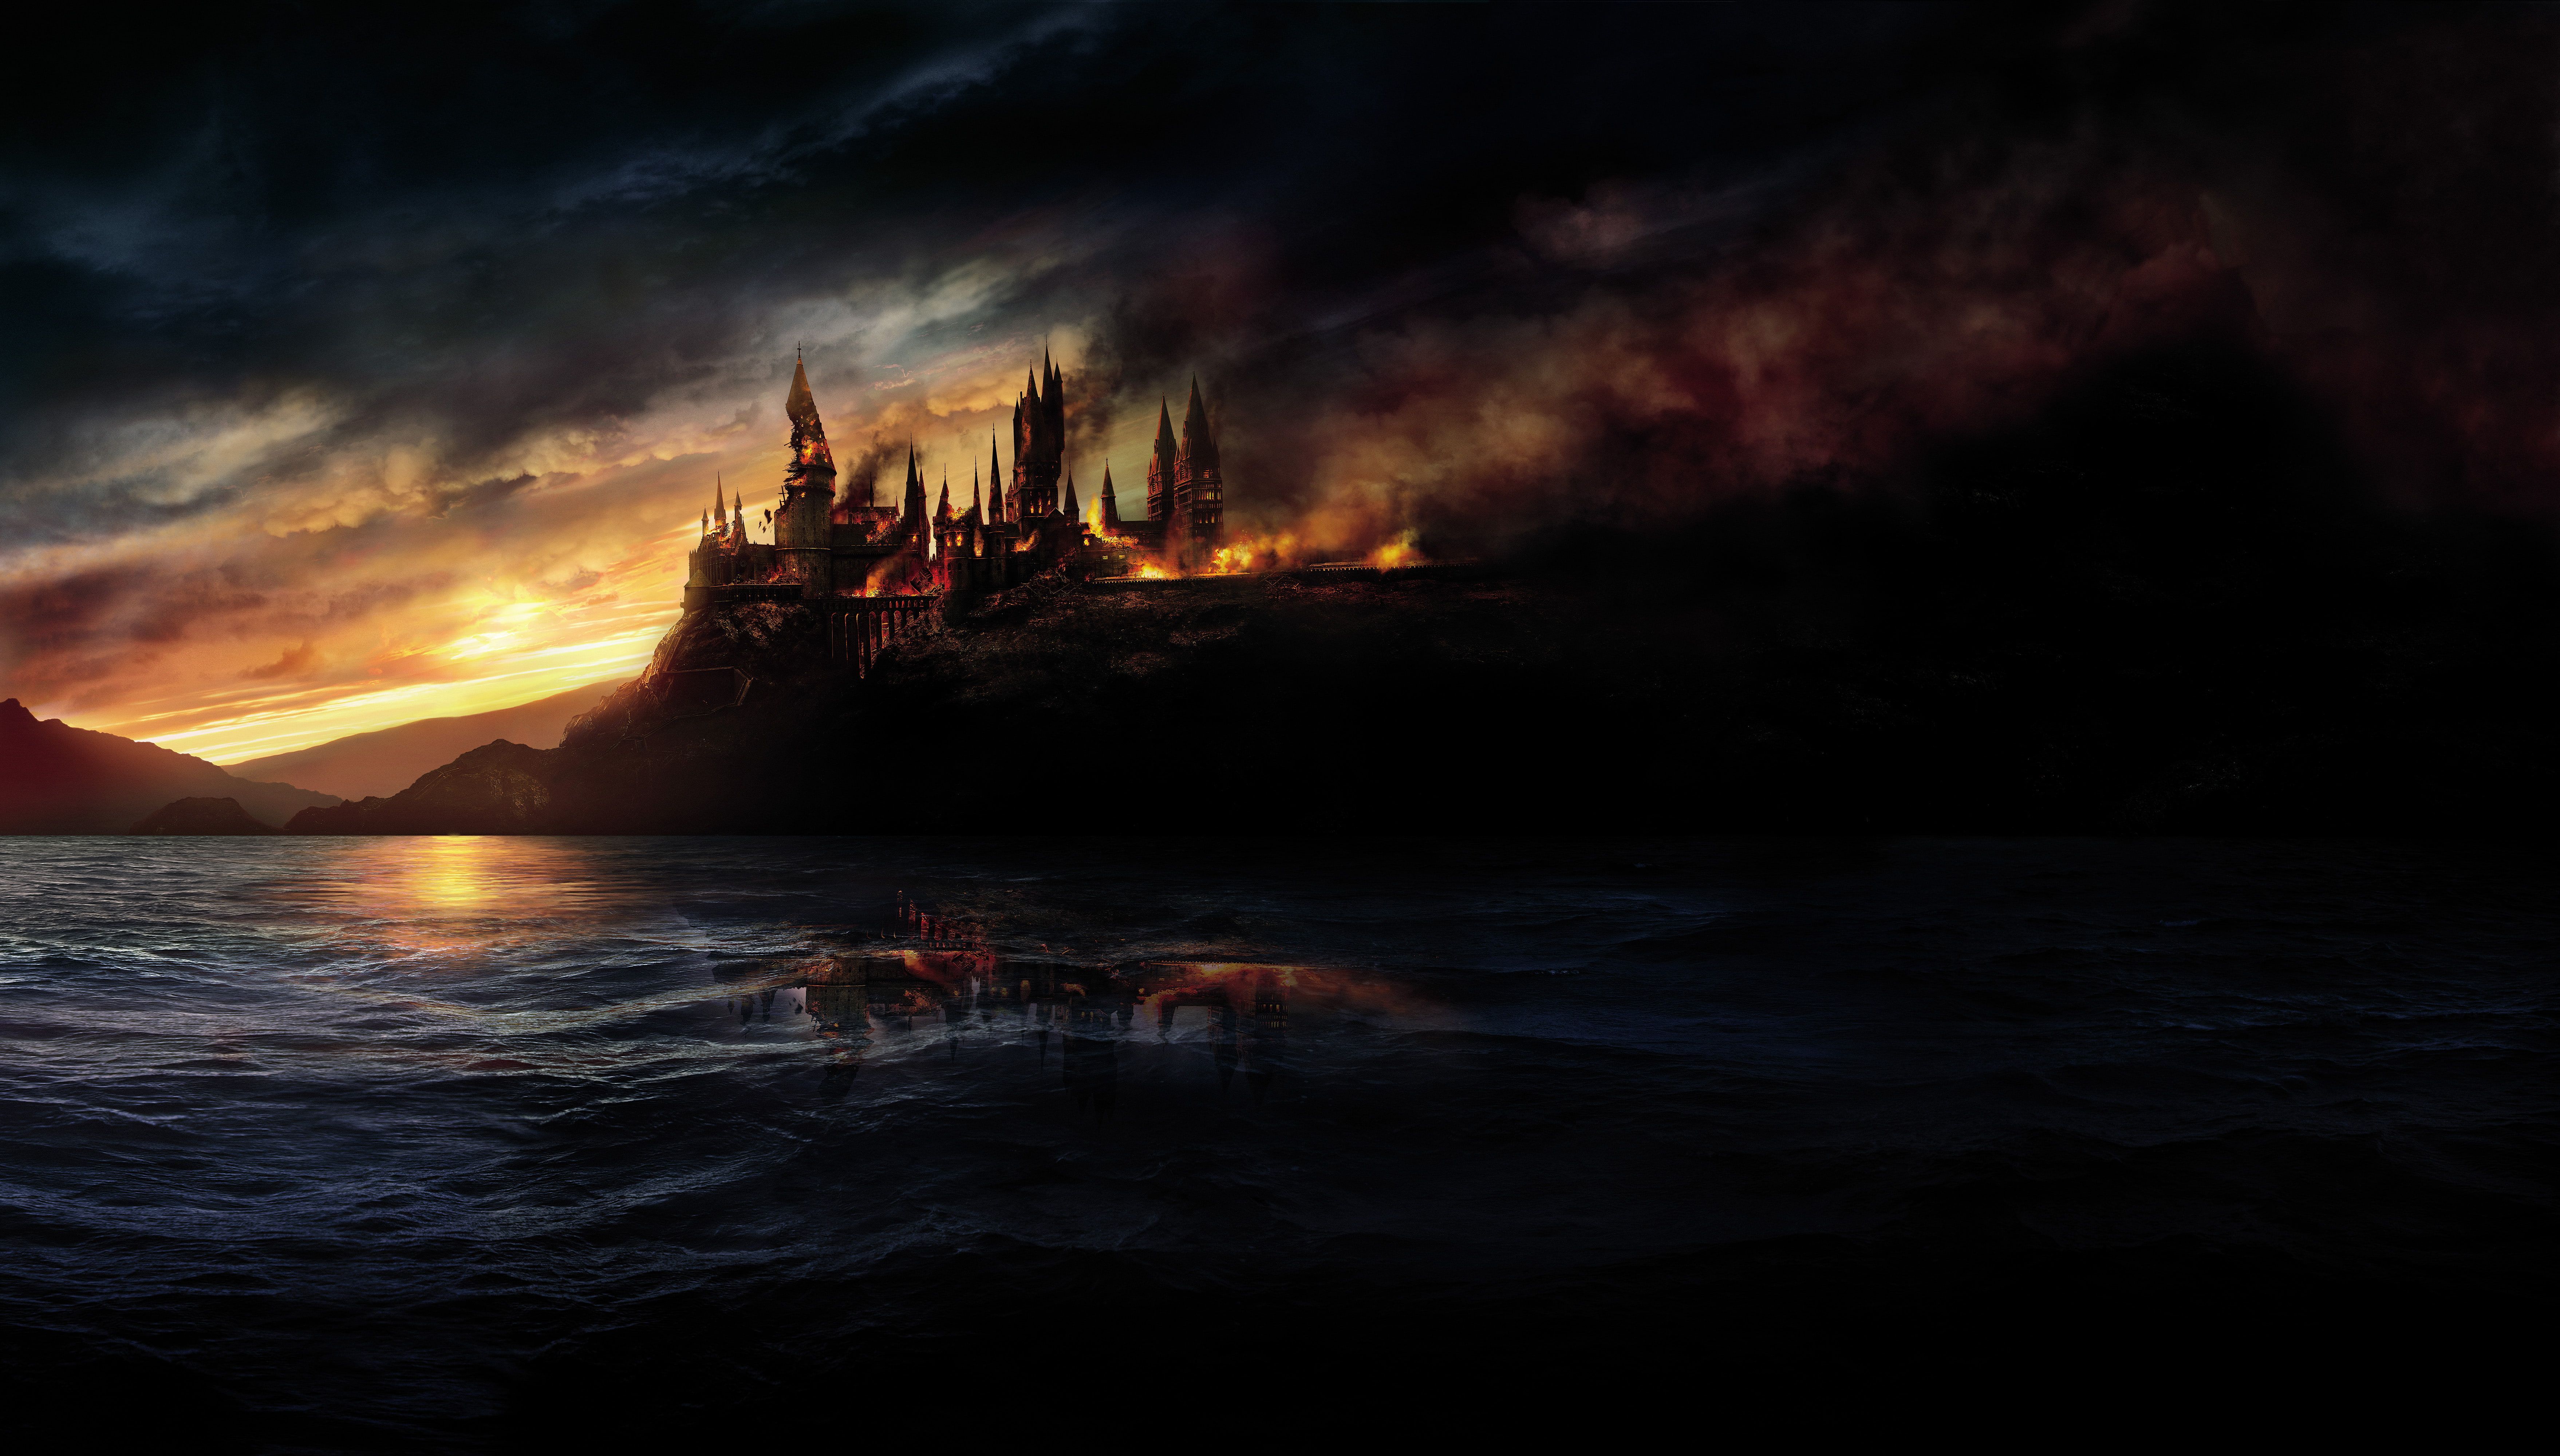 8K #Hogwarts K #Burning Harry Potter and the Deathly Hallows K # wallpaper #hdwallpaper #desktop. Harry potter wallpaper, Deathly hallows wallpaper, Hogwarts